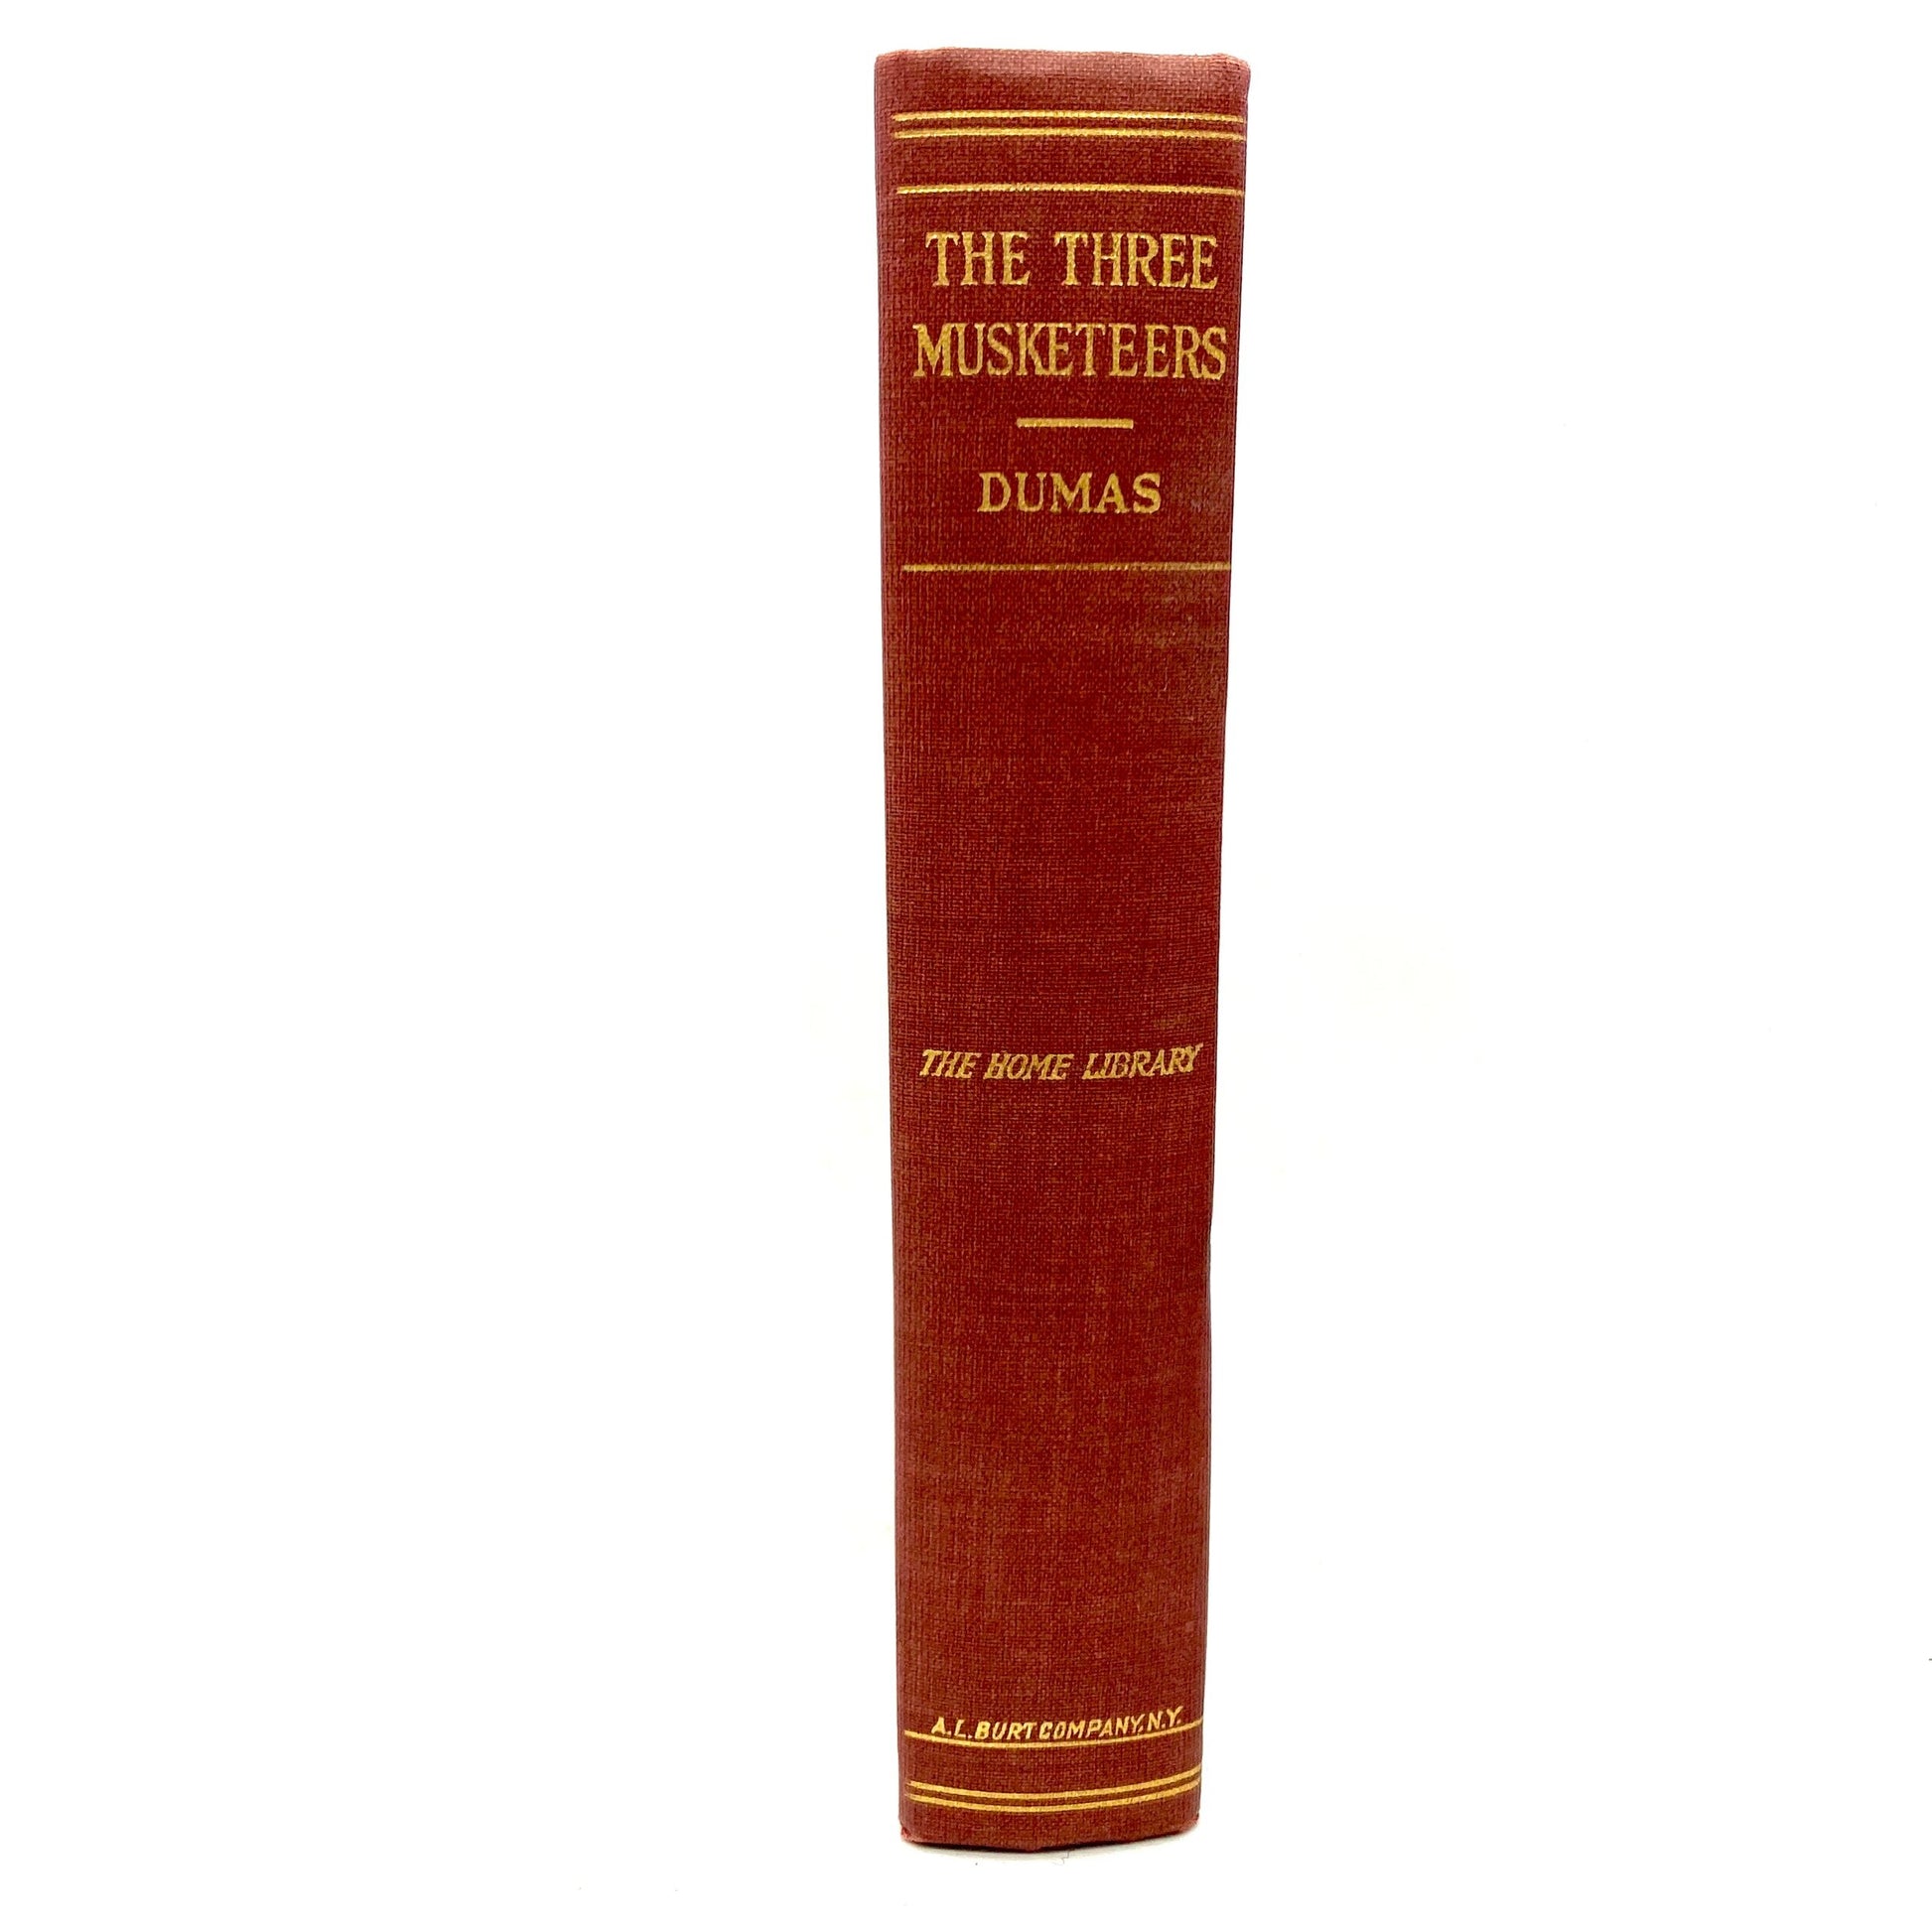 DUMAS, Alexandre "The Three Musketeers" [A.L. Burt Company, c1902] - Buzz Bookstore